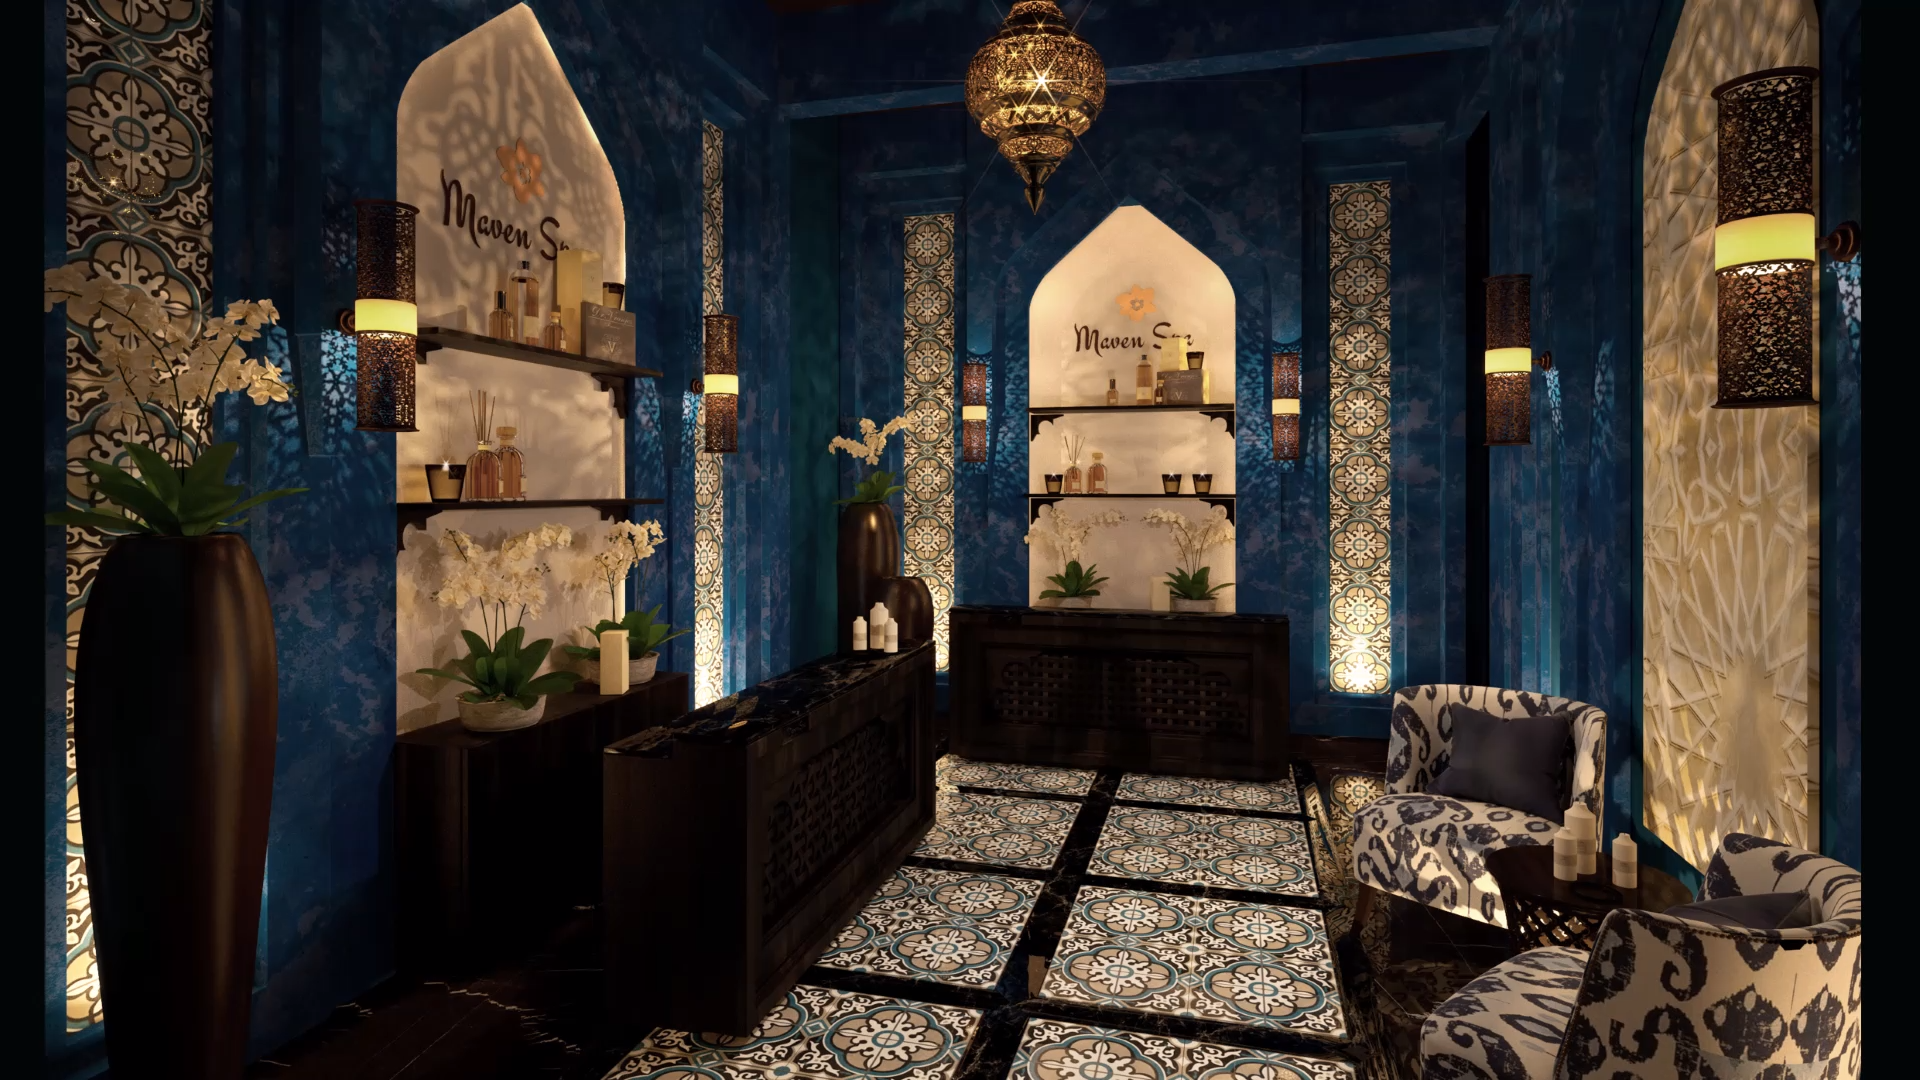 Arabic style beauty salon interior design with luxury decorations - Arabic style beauty salon interior design with luxury decorations -   beauty Spa interior